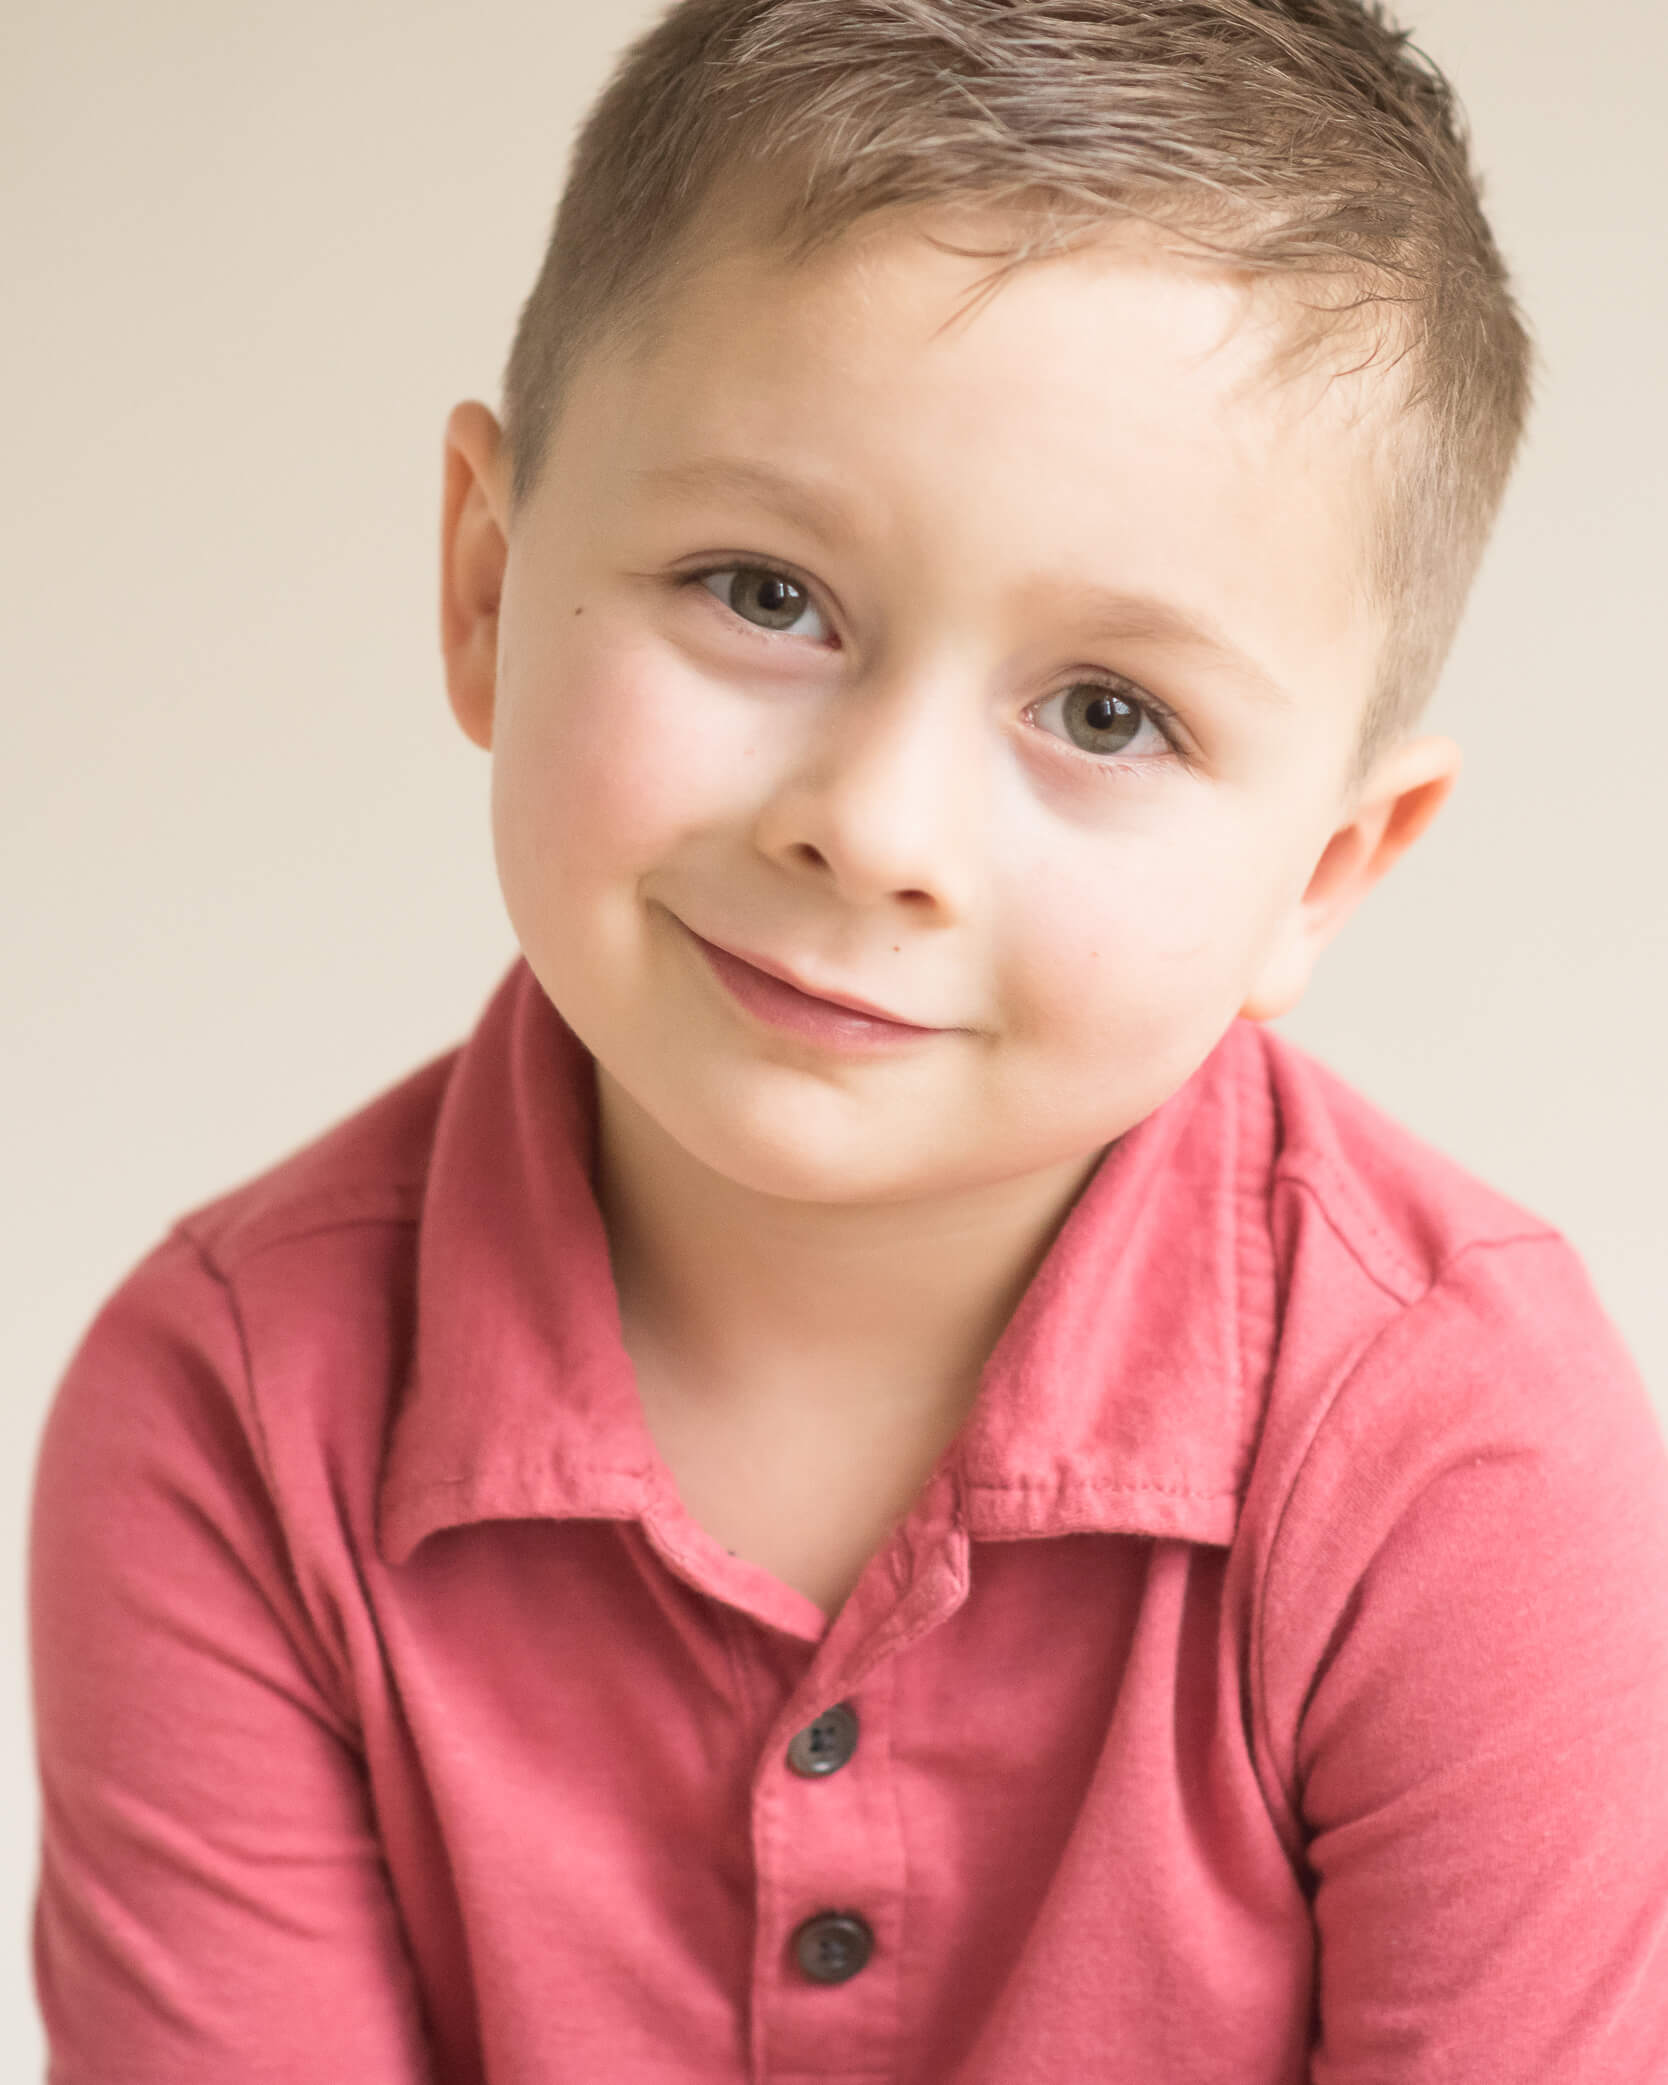 adorable little boy in red shirt studio portrait